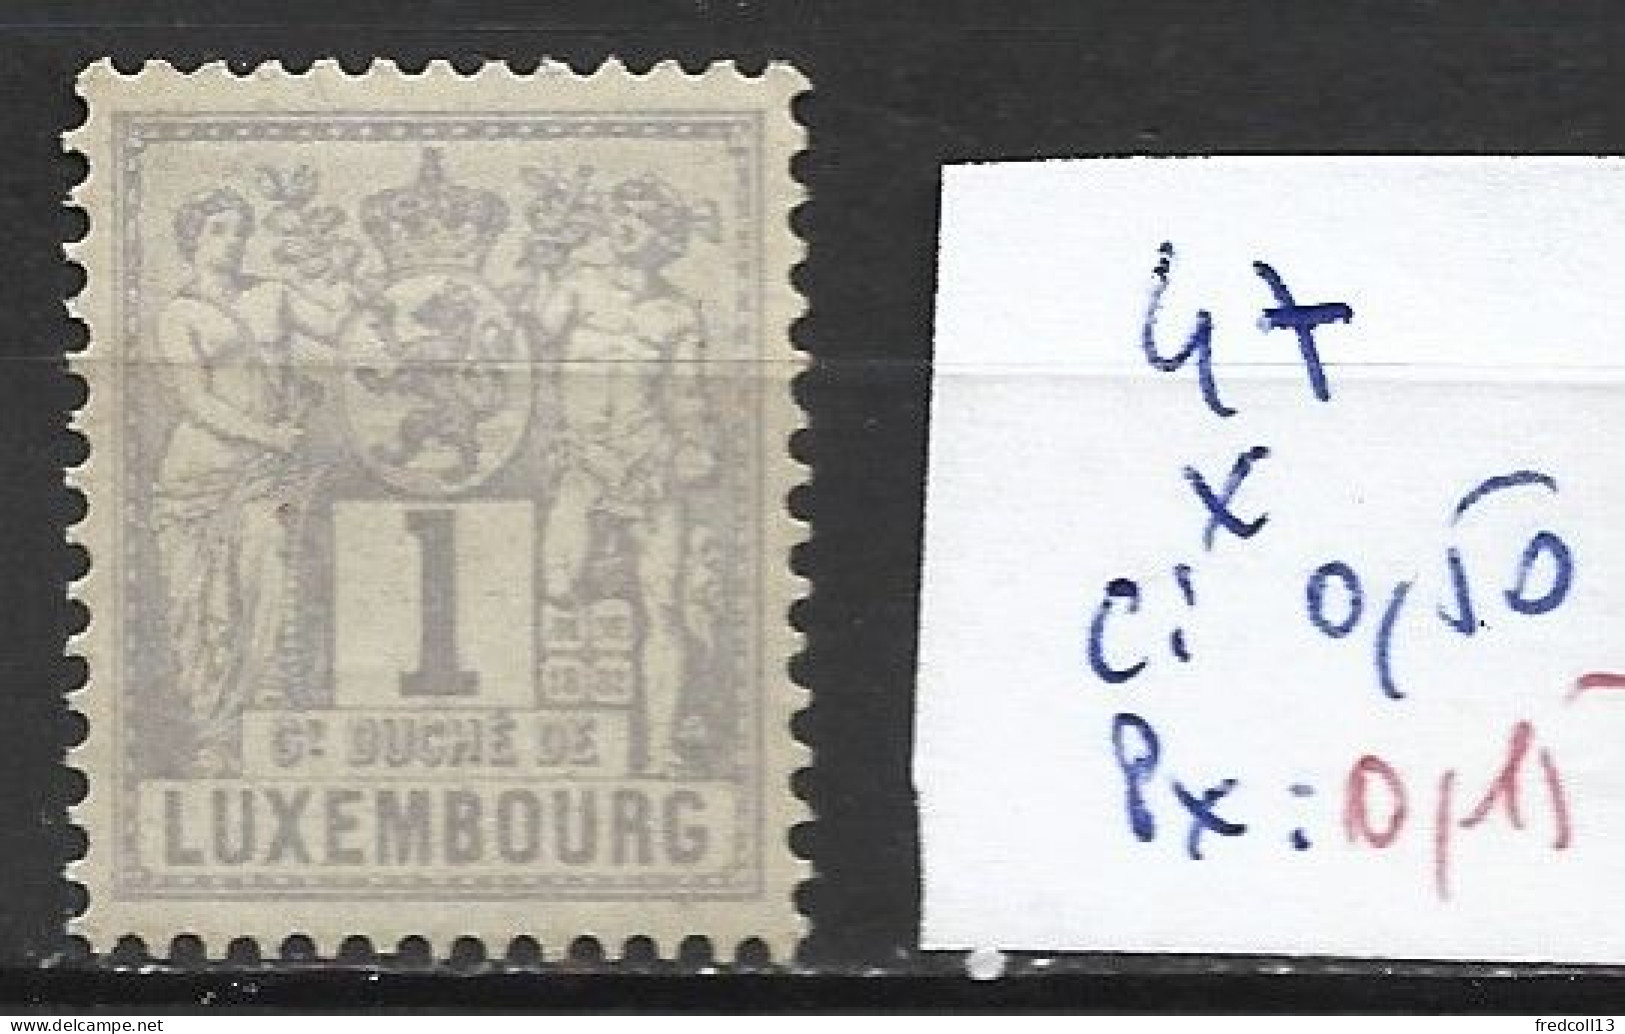 LUXEMBOURG 47 * Côte 0.50 € - 1882 Allegorie